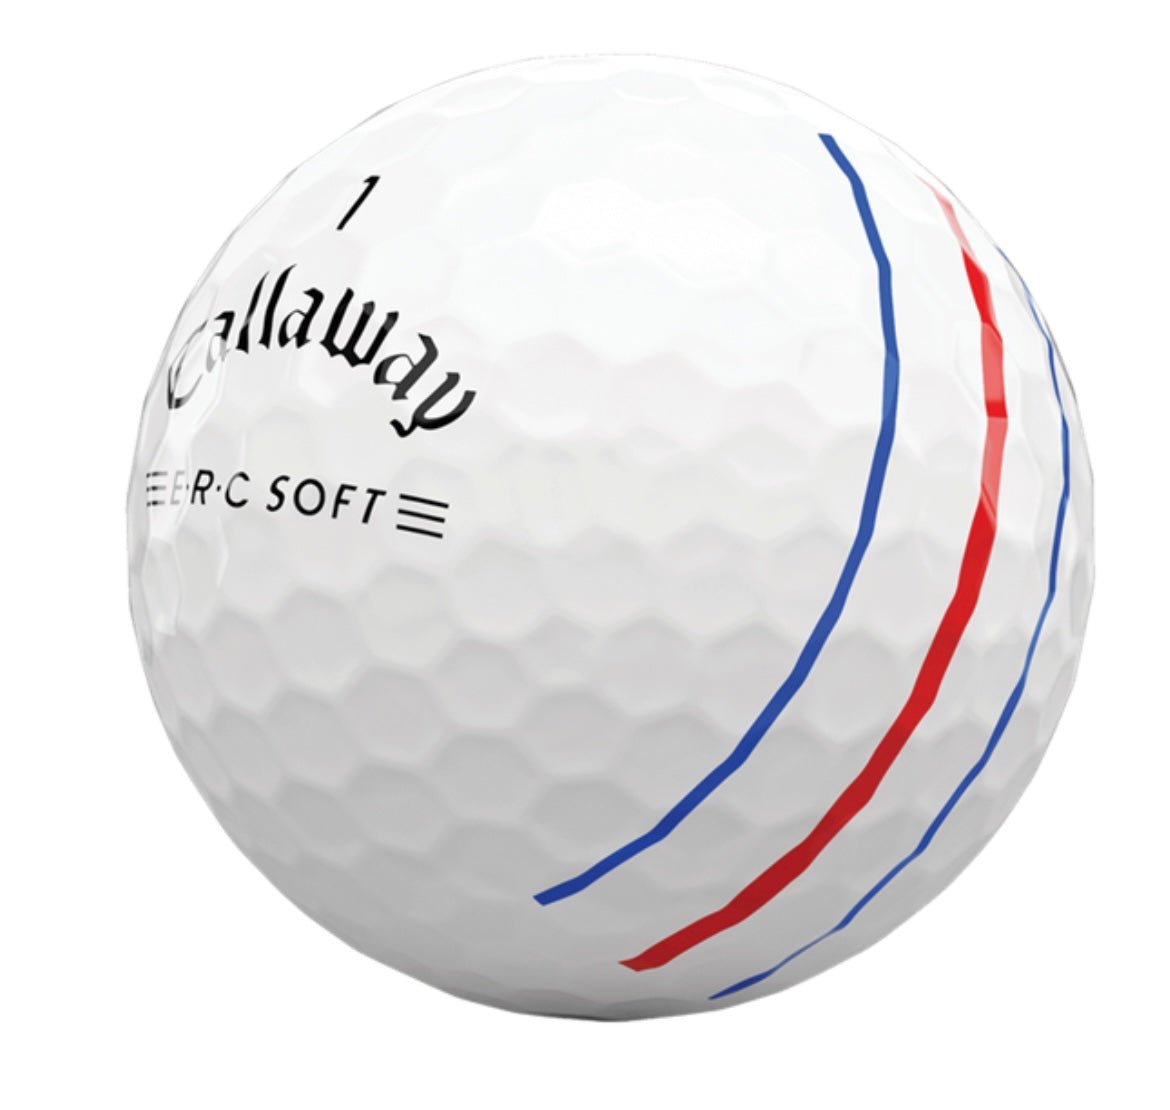 CALLAWAY E•R•C SOFT PREMIUM (x12 BALLS) - Golf Store UK